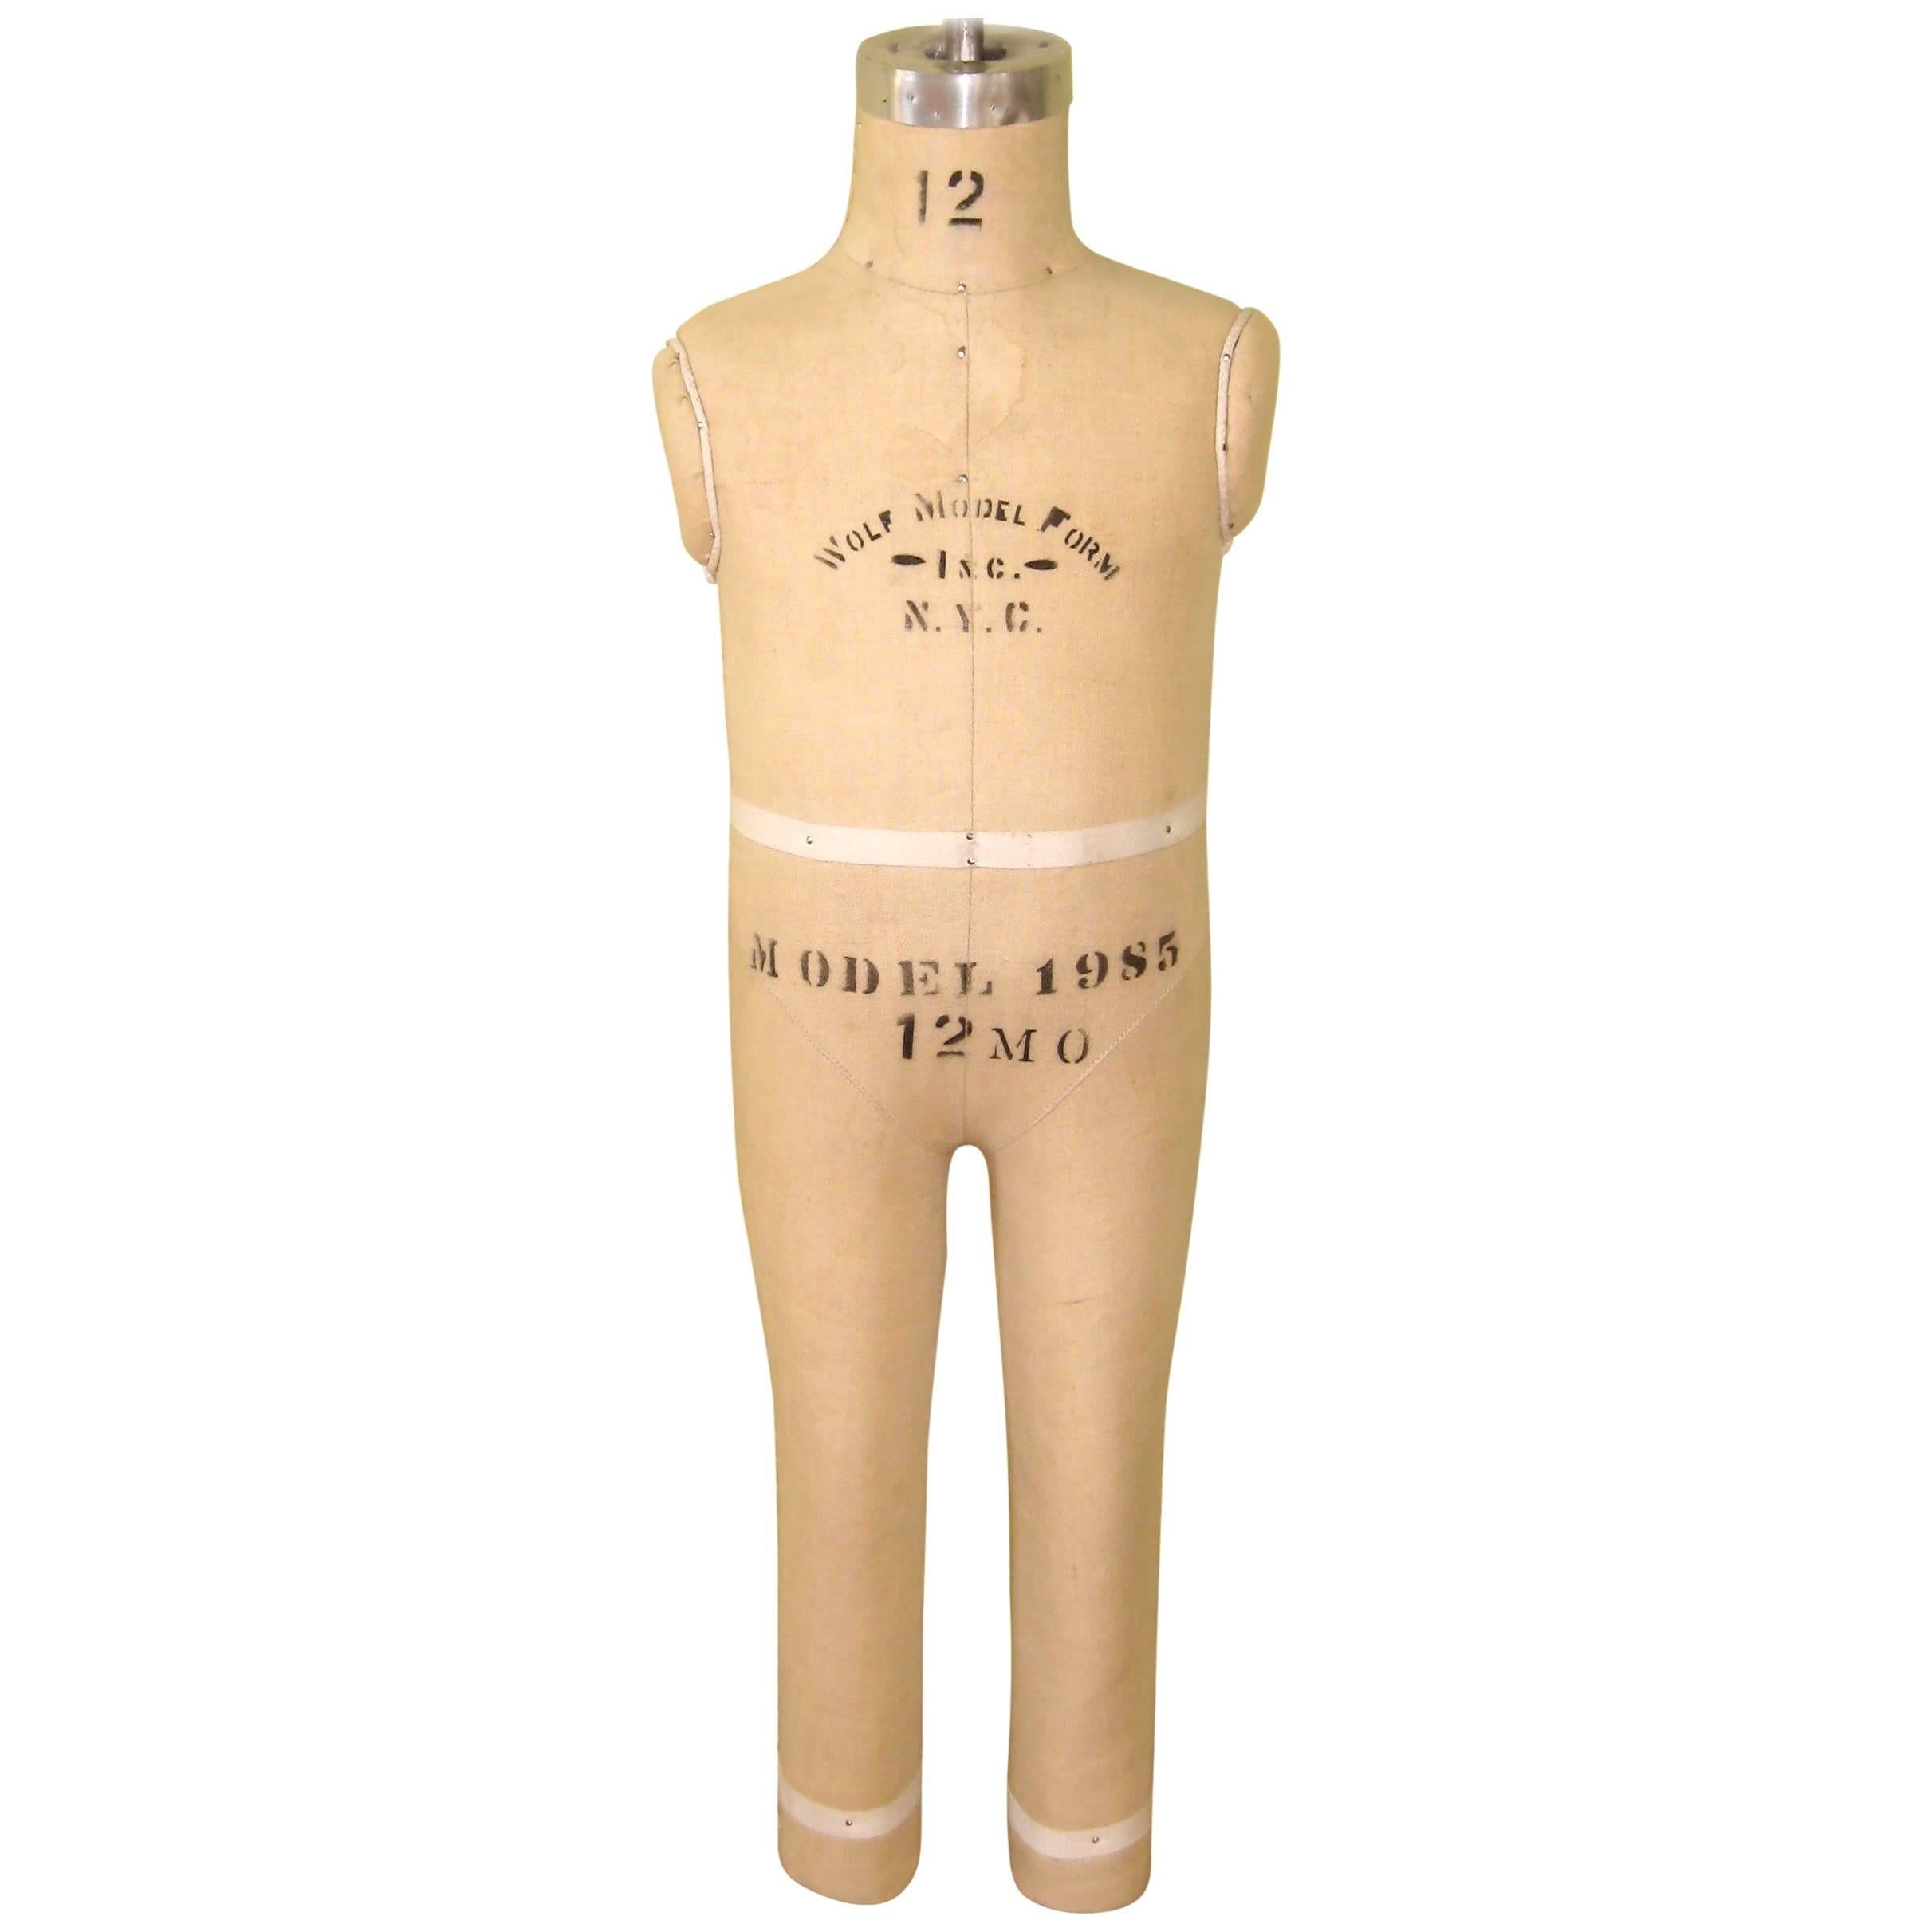 Sold at Auction: WOLFFORM KAREN Dress Clothing Mannequin